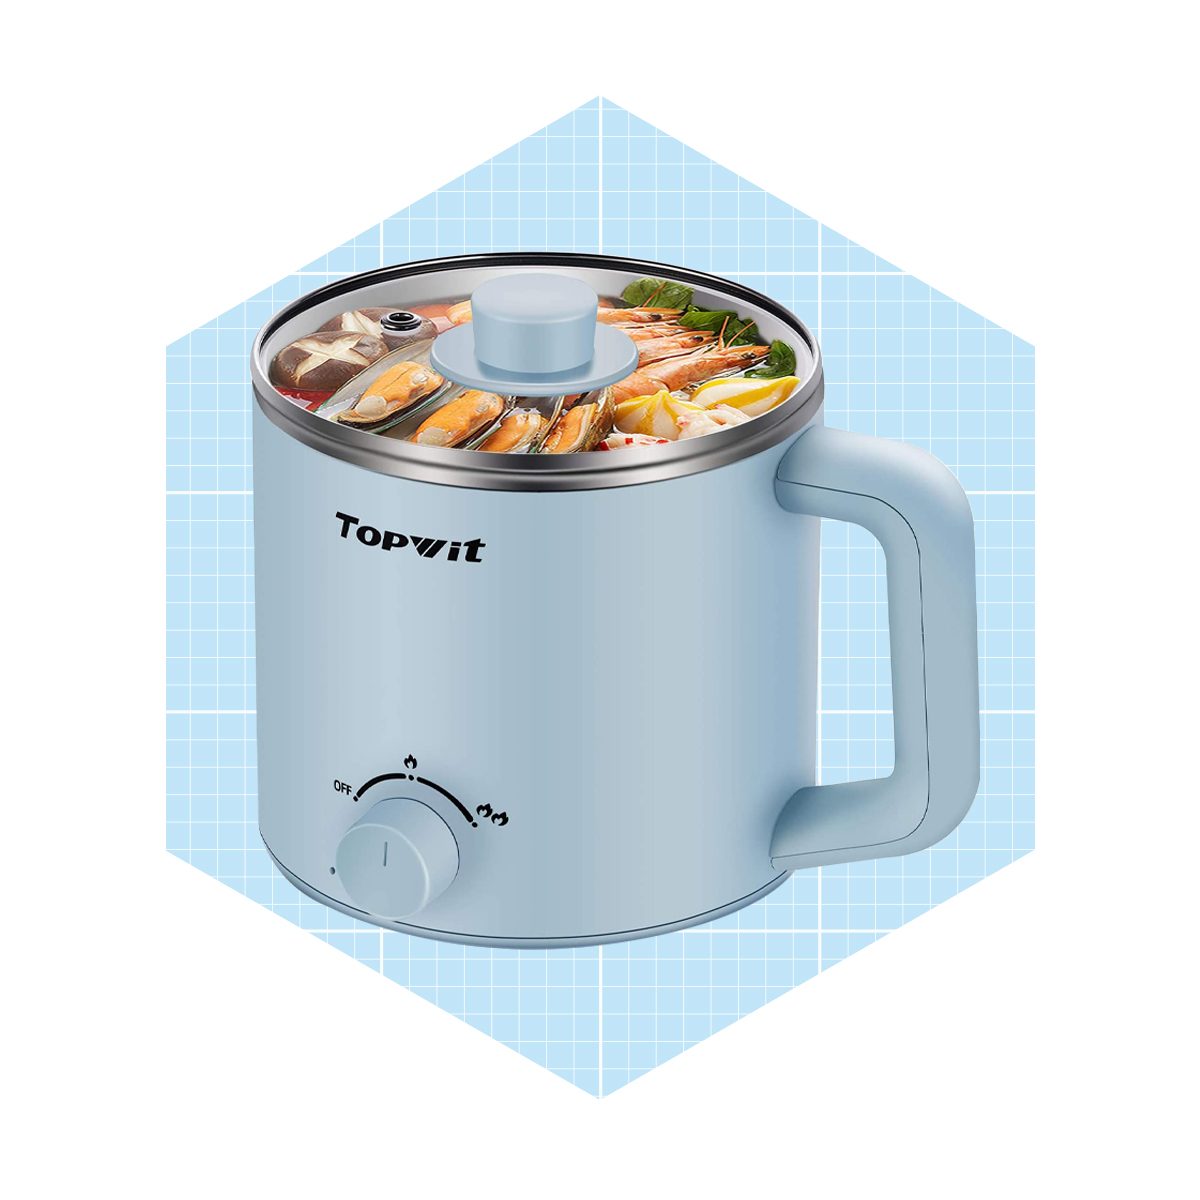 Topwit Electric Hot Pot Ecomm Amazon.com